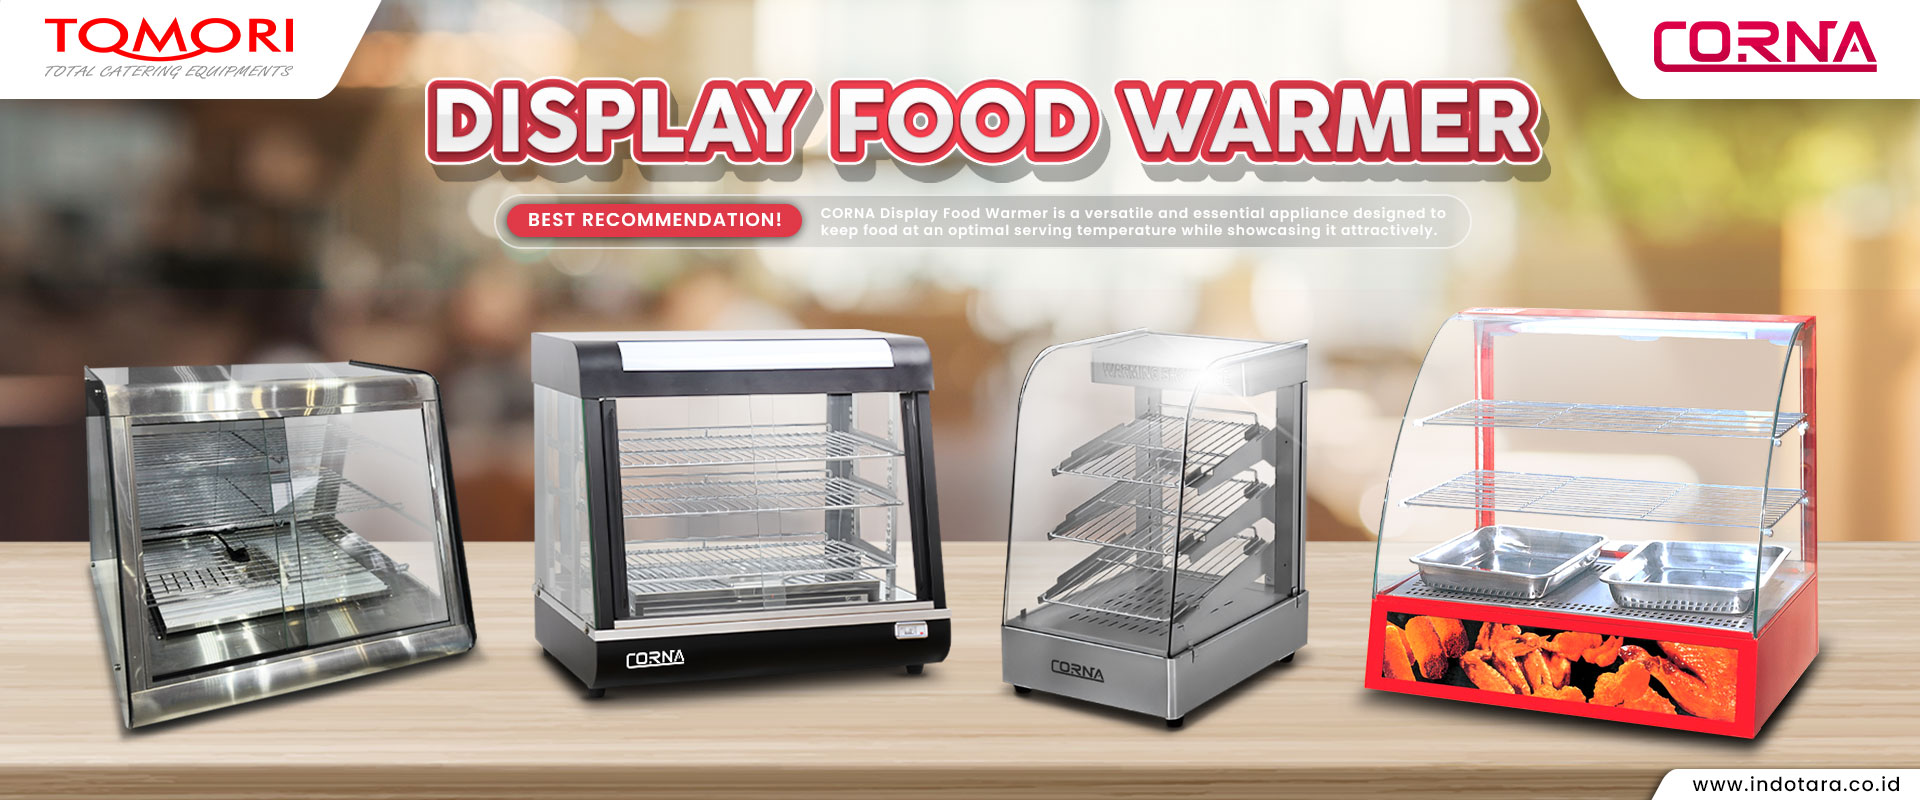 Jual CORNA Display Food Warmer